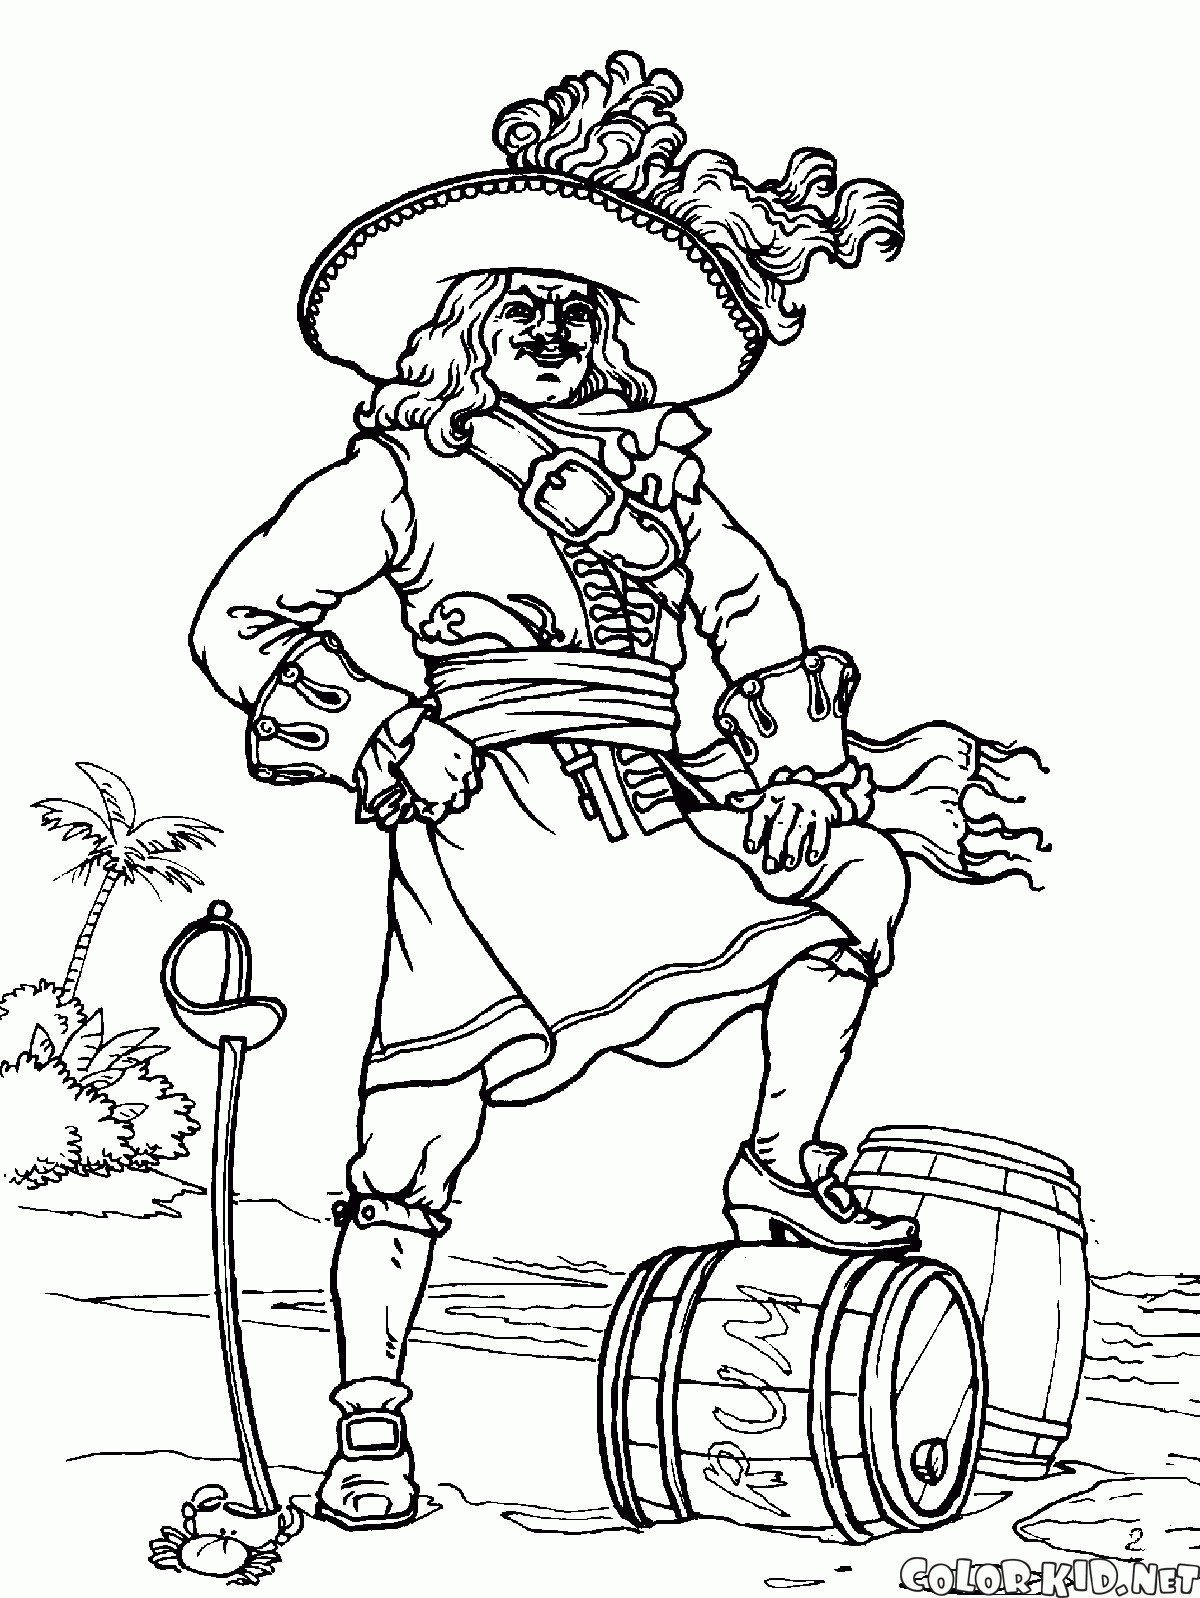 Pirate Baron